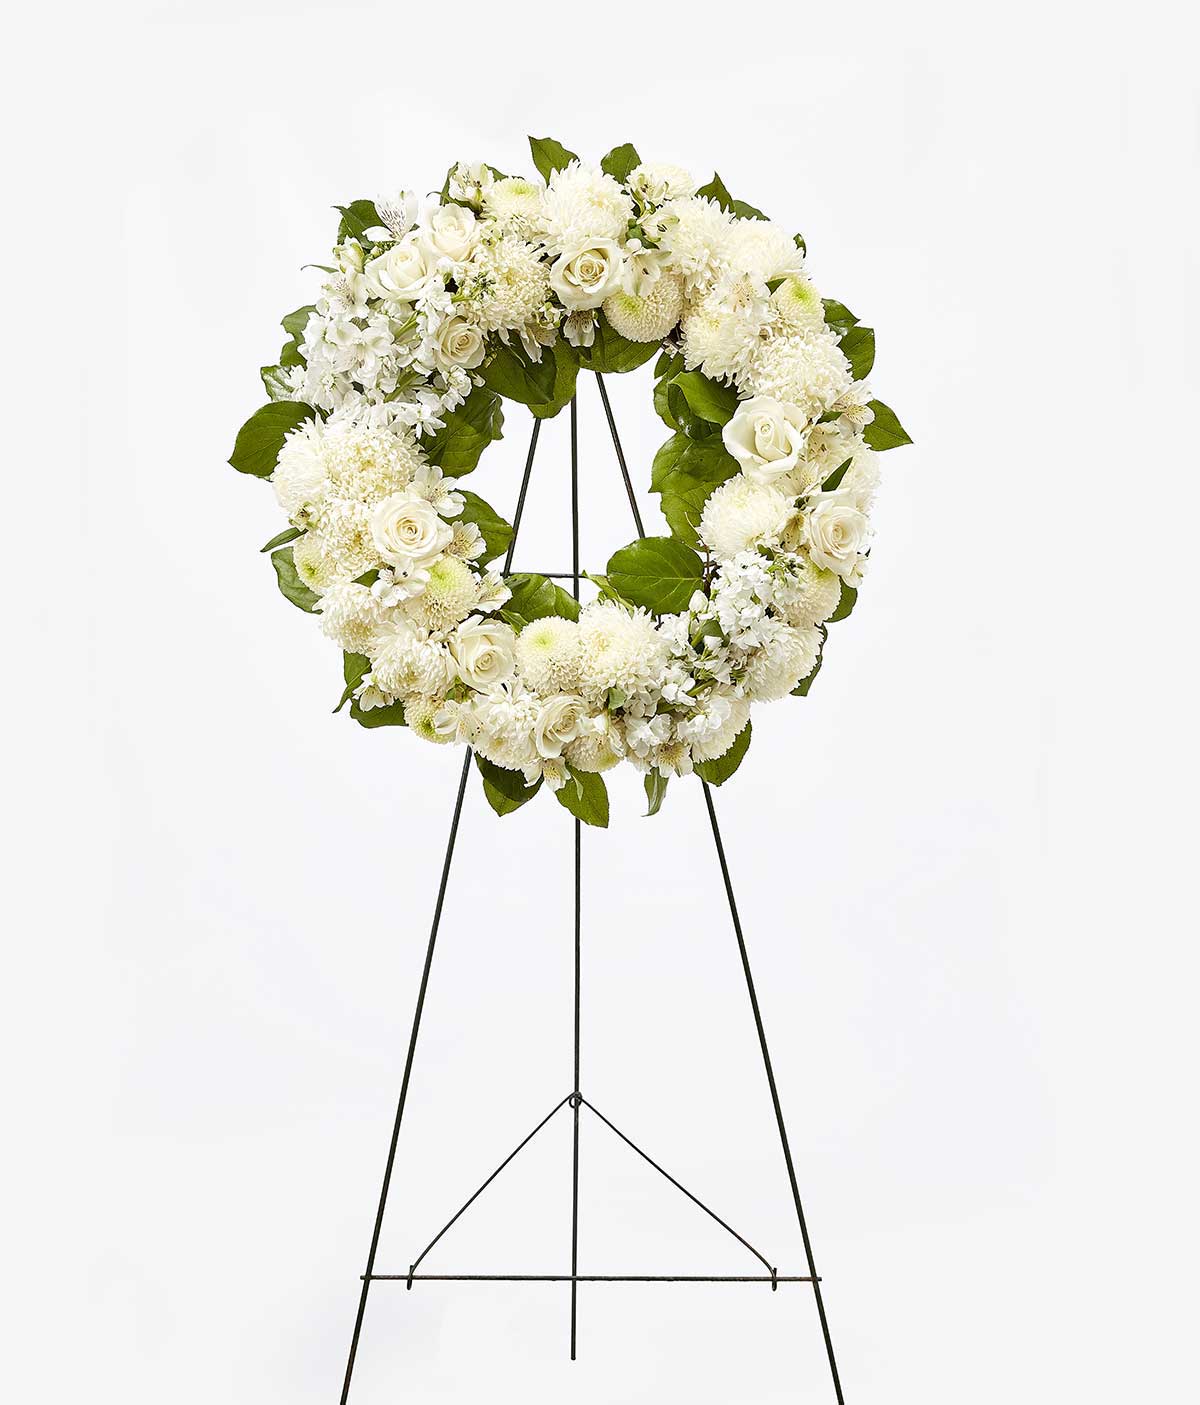 Remembrance Wreath - Flowers by Hoboken